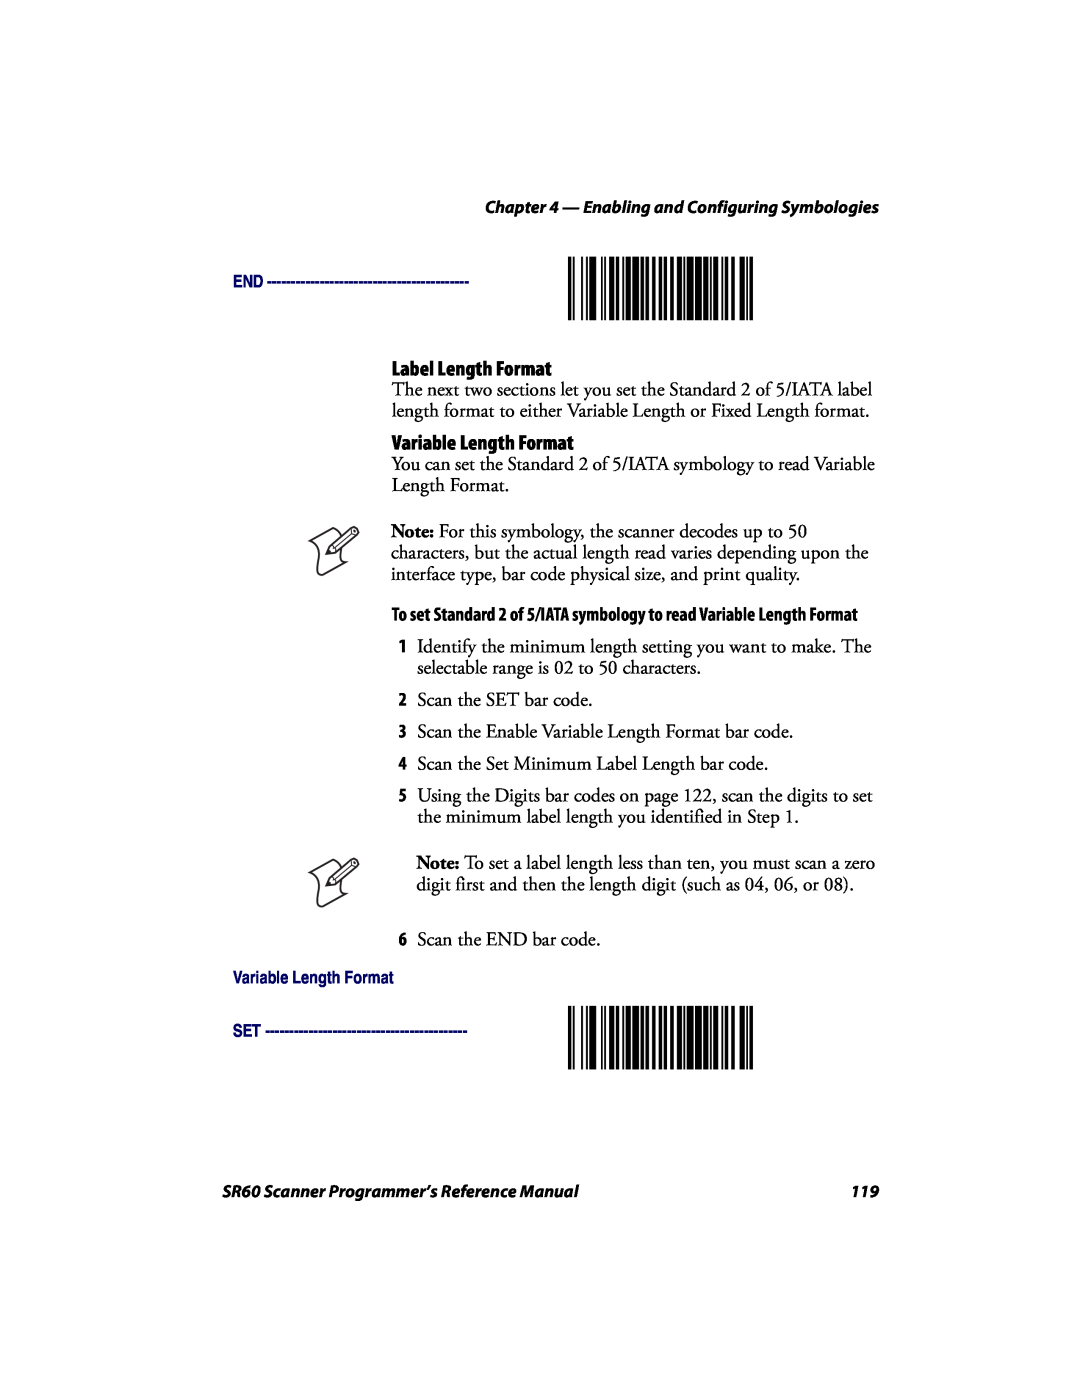 Intermec SR60 manual Label Length Format, Variable Length Format 